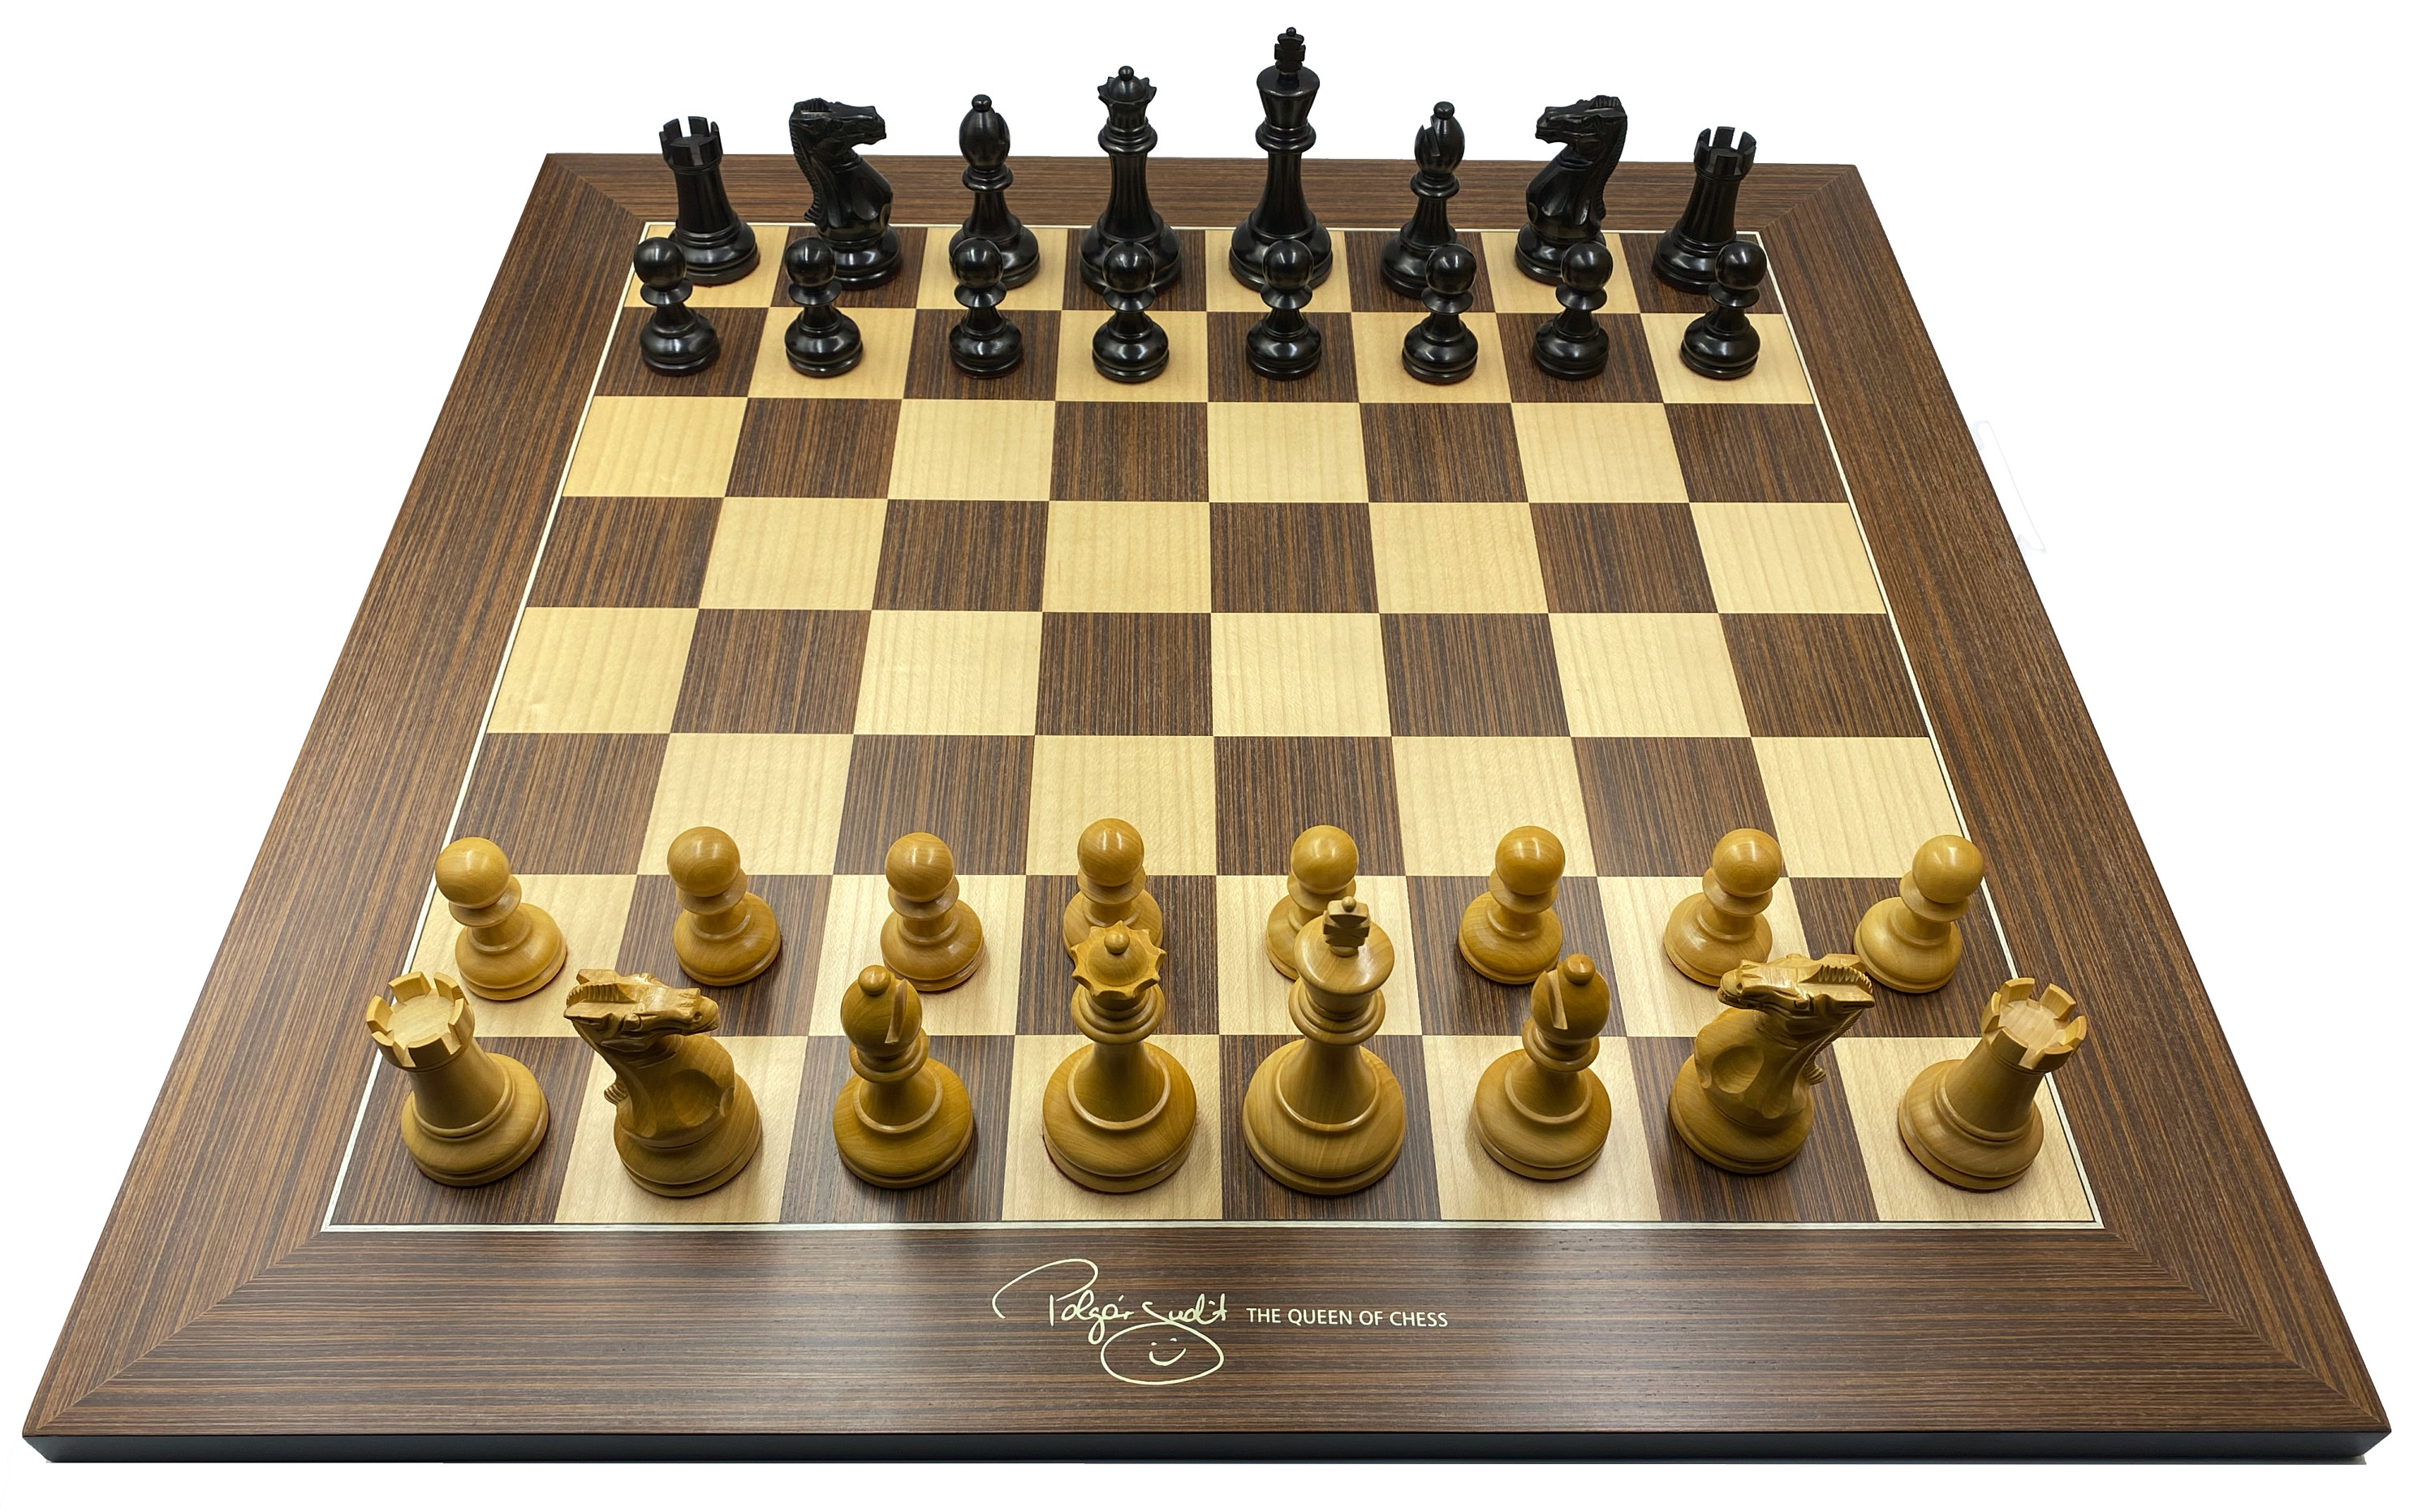 judit polgar - Chess Forums 